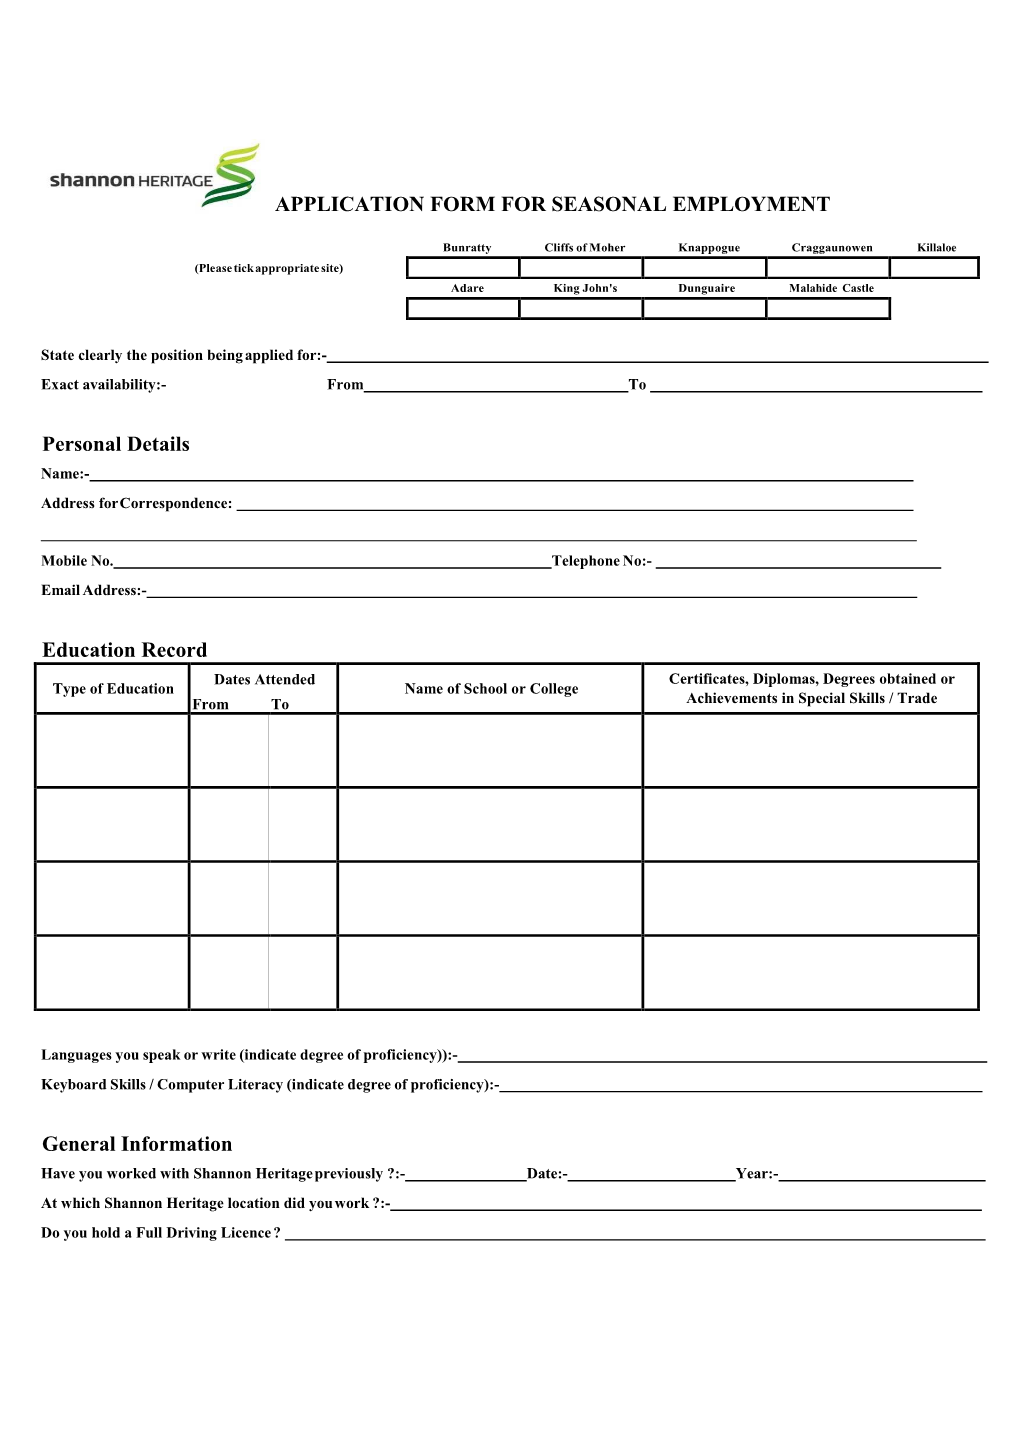 Application Form for Seasonal Employment